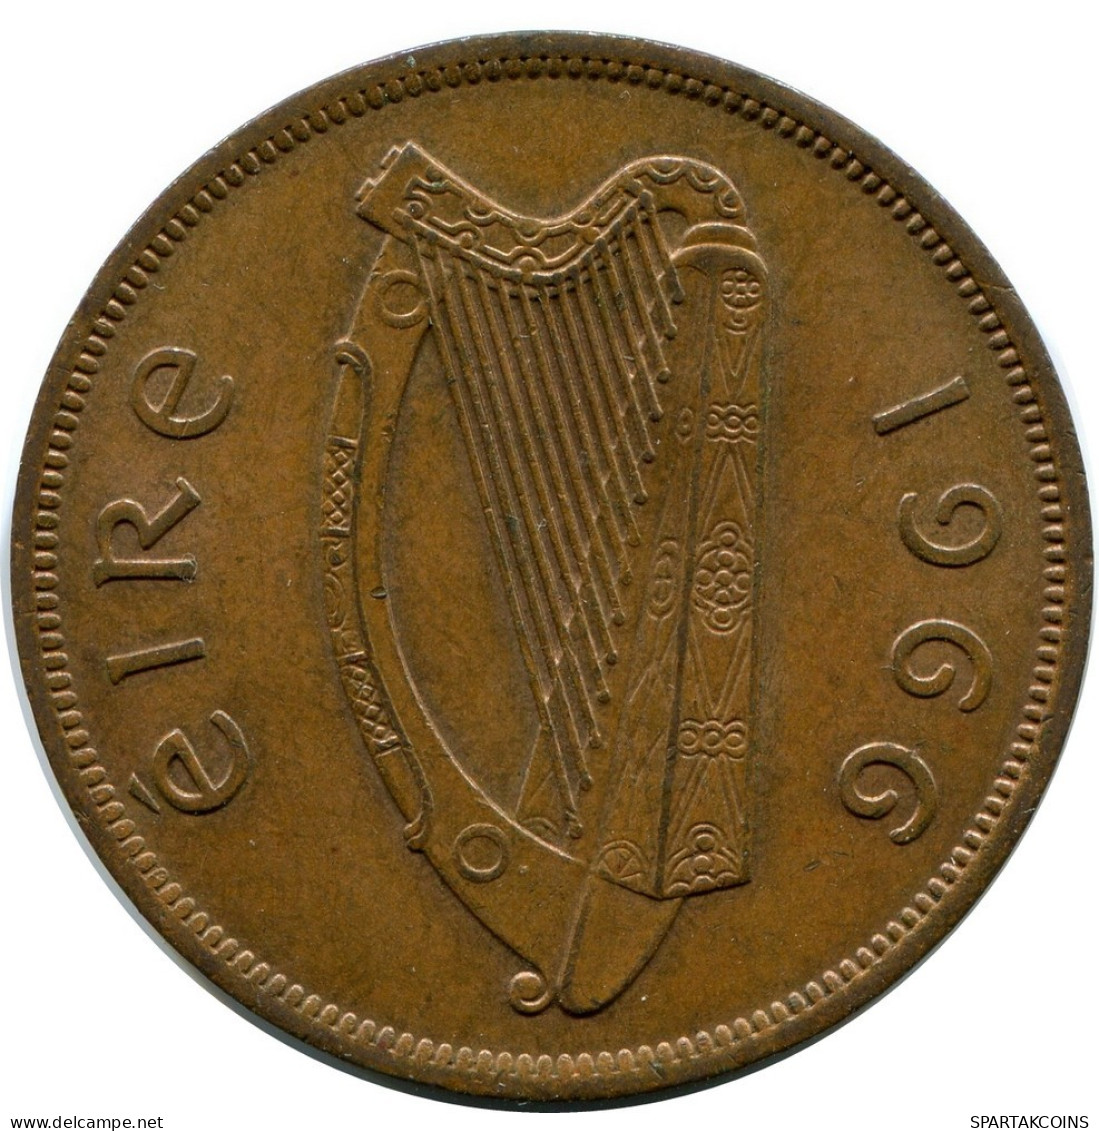 1 PENNY 1966 IRLANDA IRELAND Moneda #AY662.E.A - Irlanda